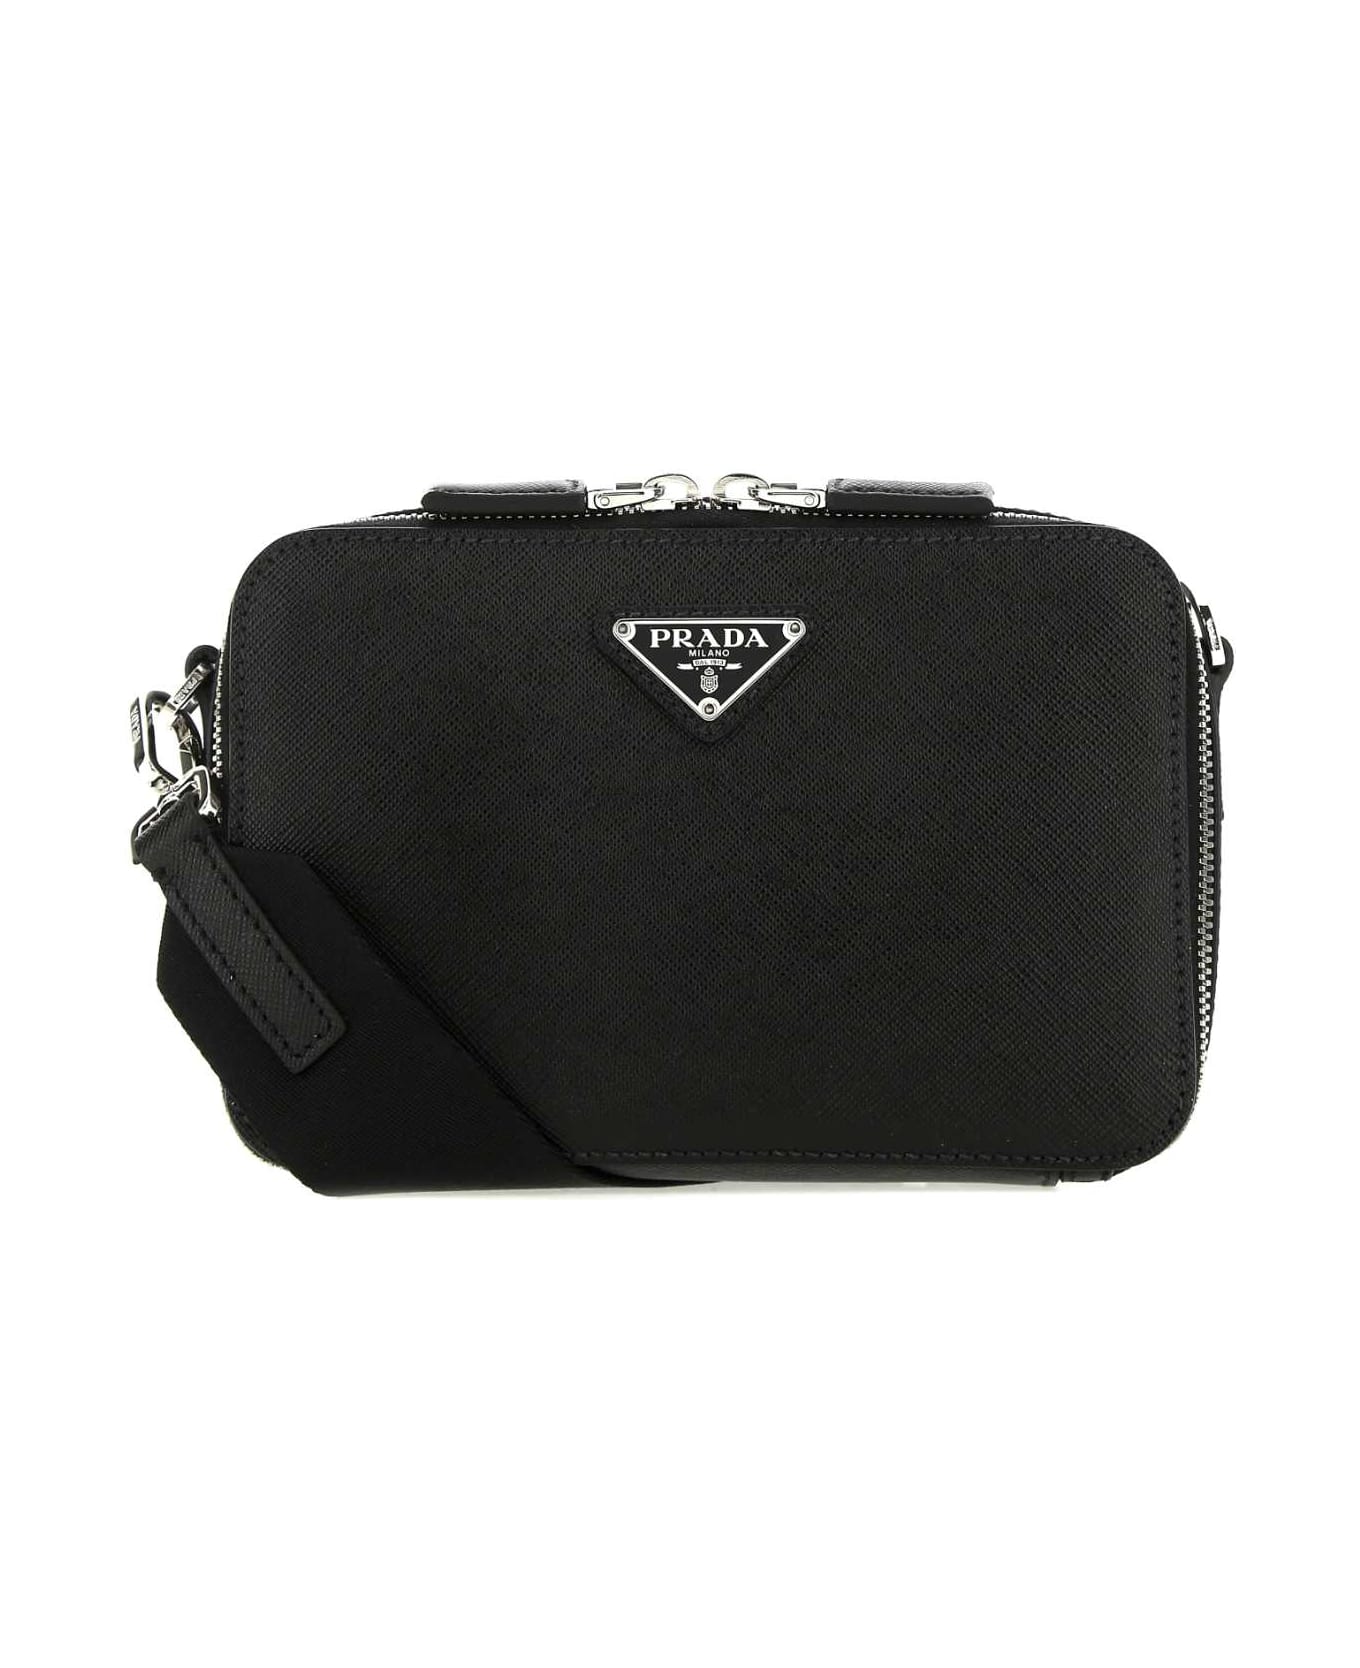 Prada Black Leather Crossbody Bag - NERO